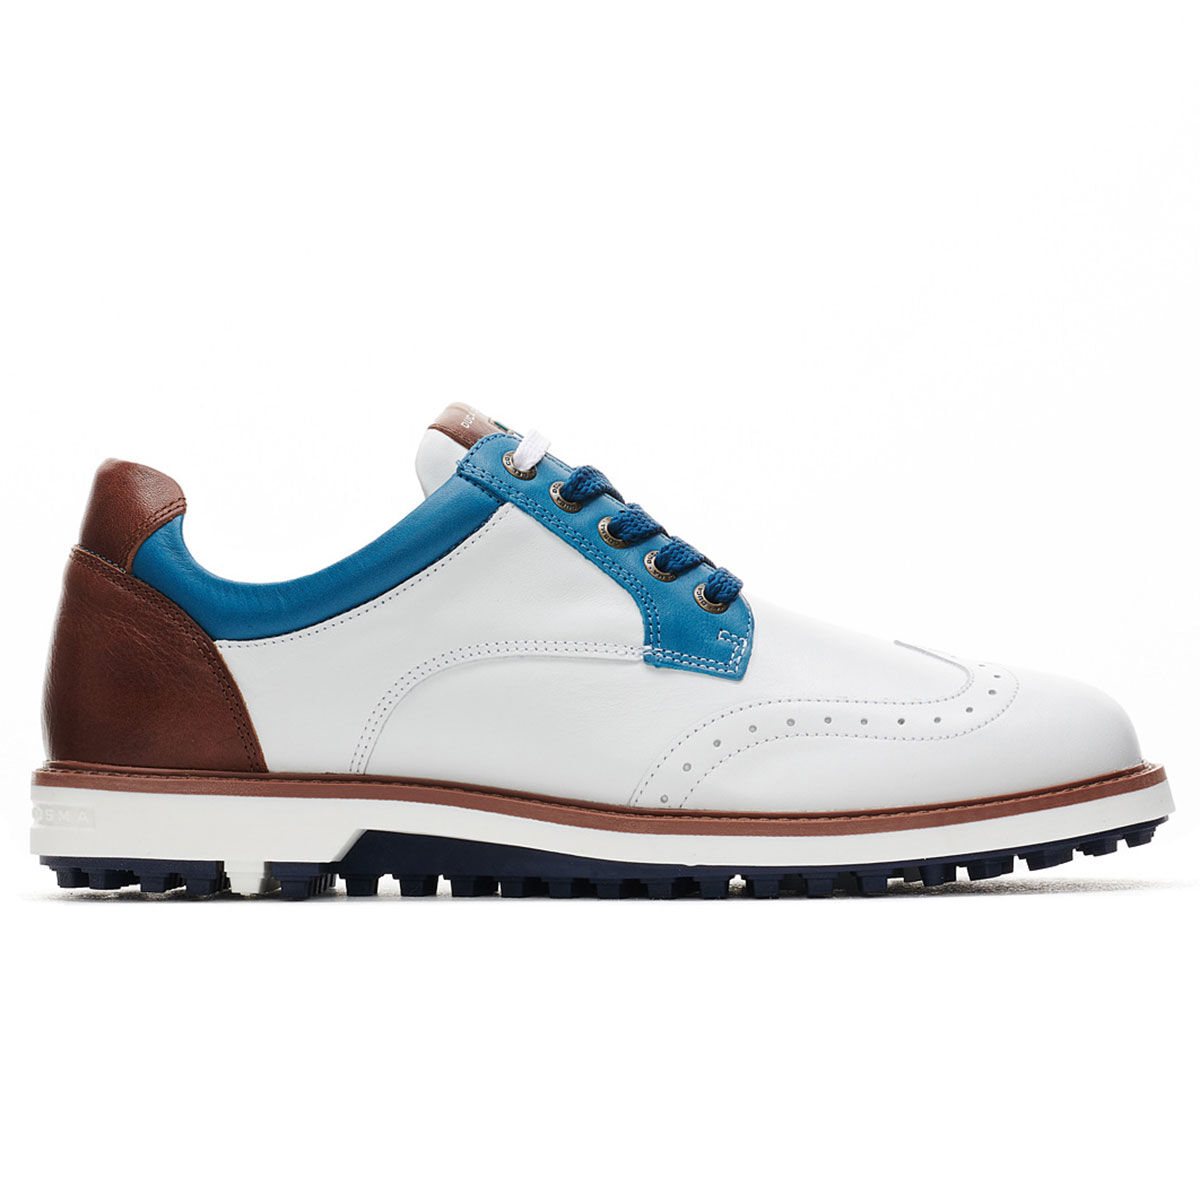 Chaussures Duca Del Cosma Eldorado, homme, 7, White/blue/cognac | Online Golf